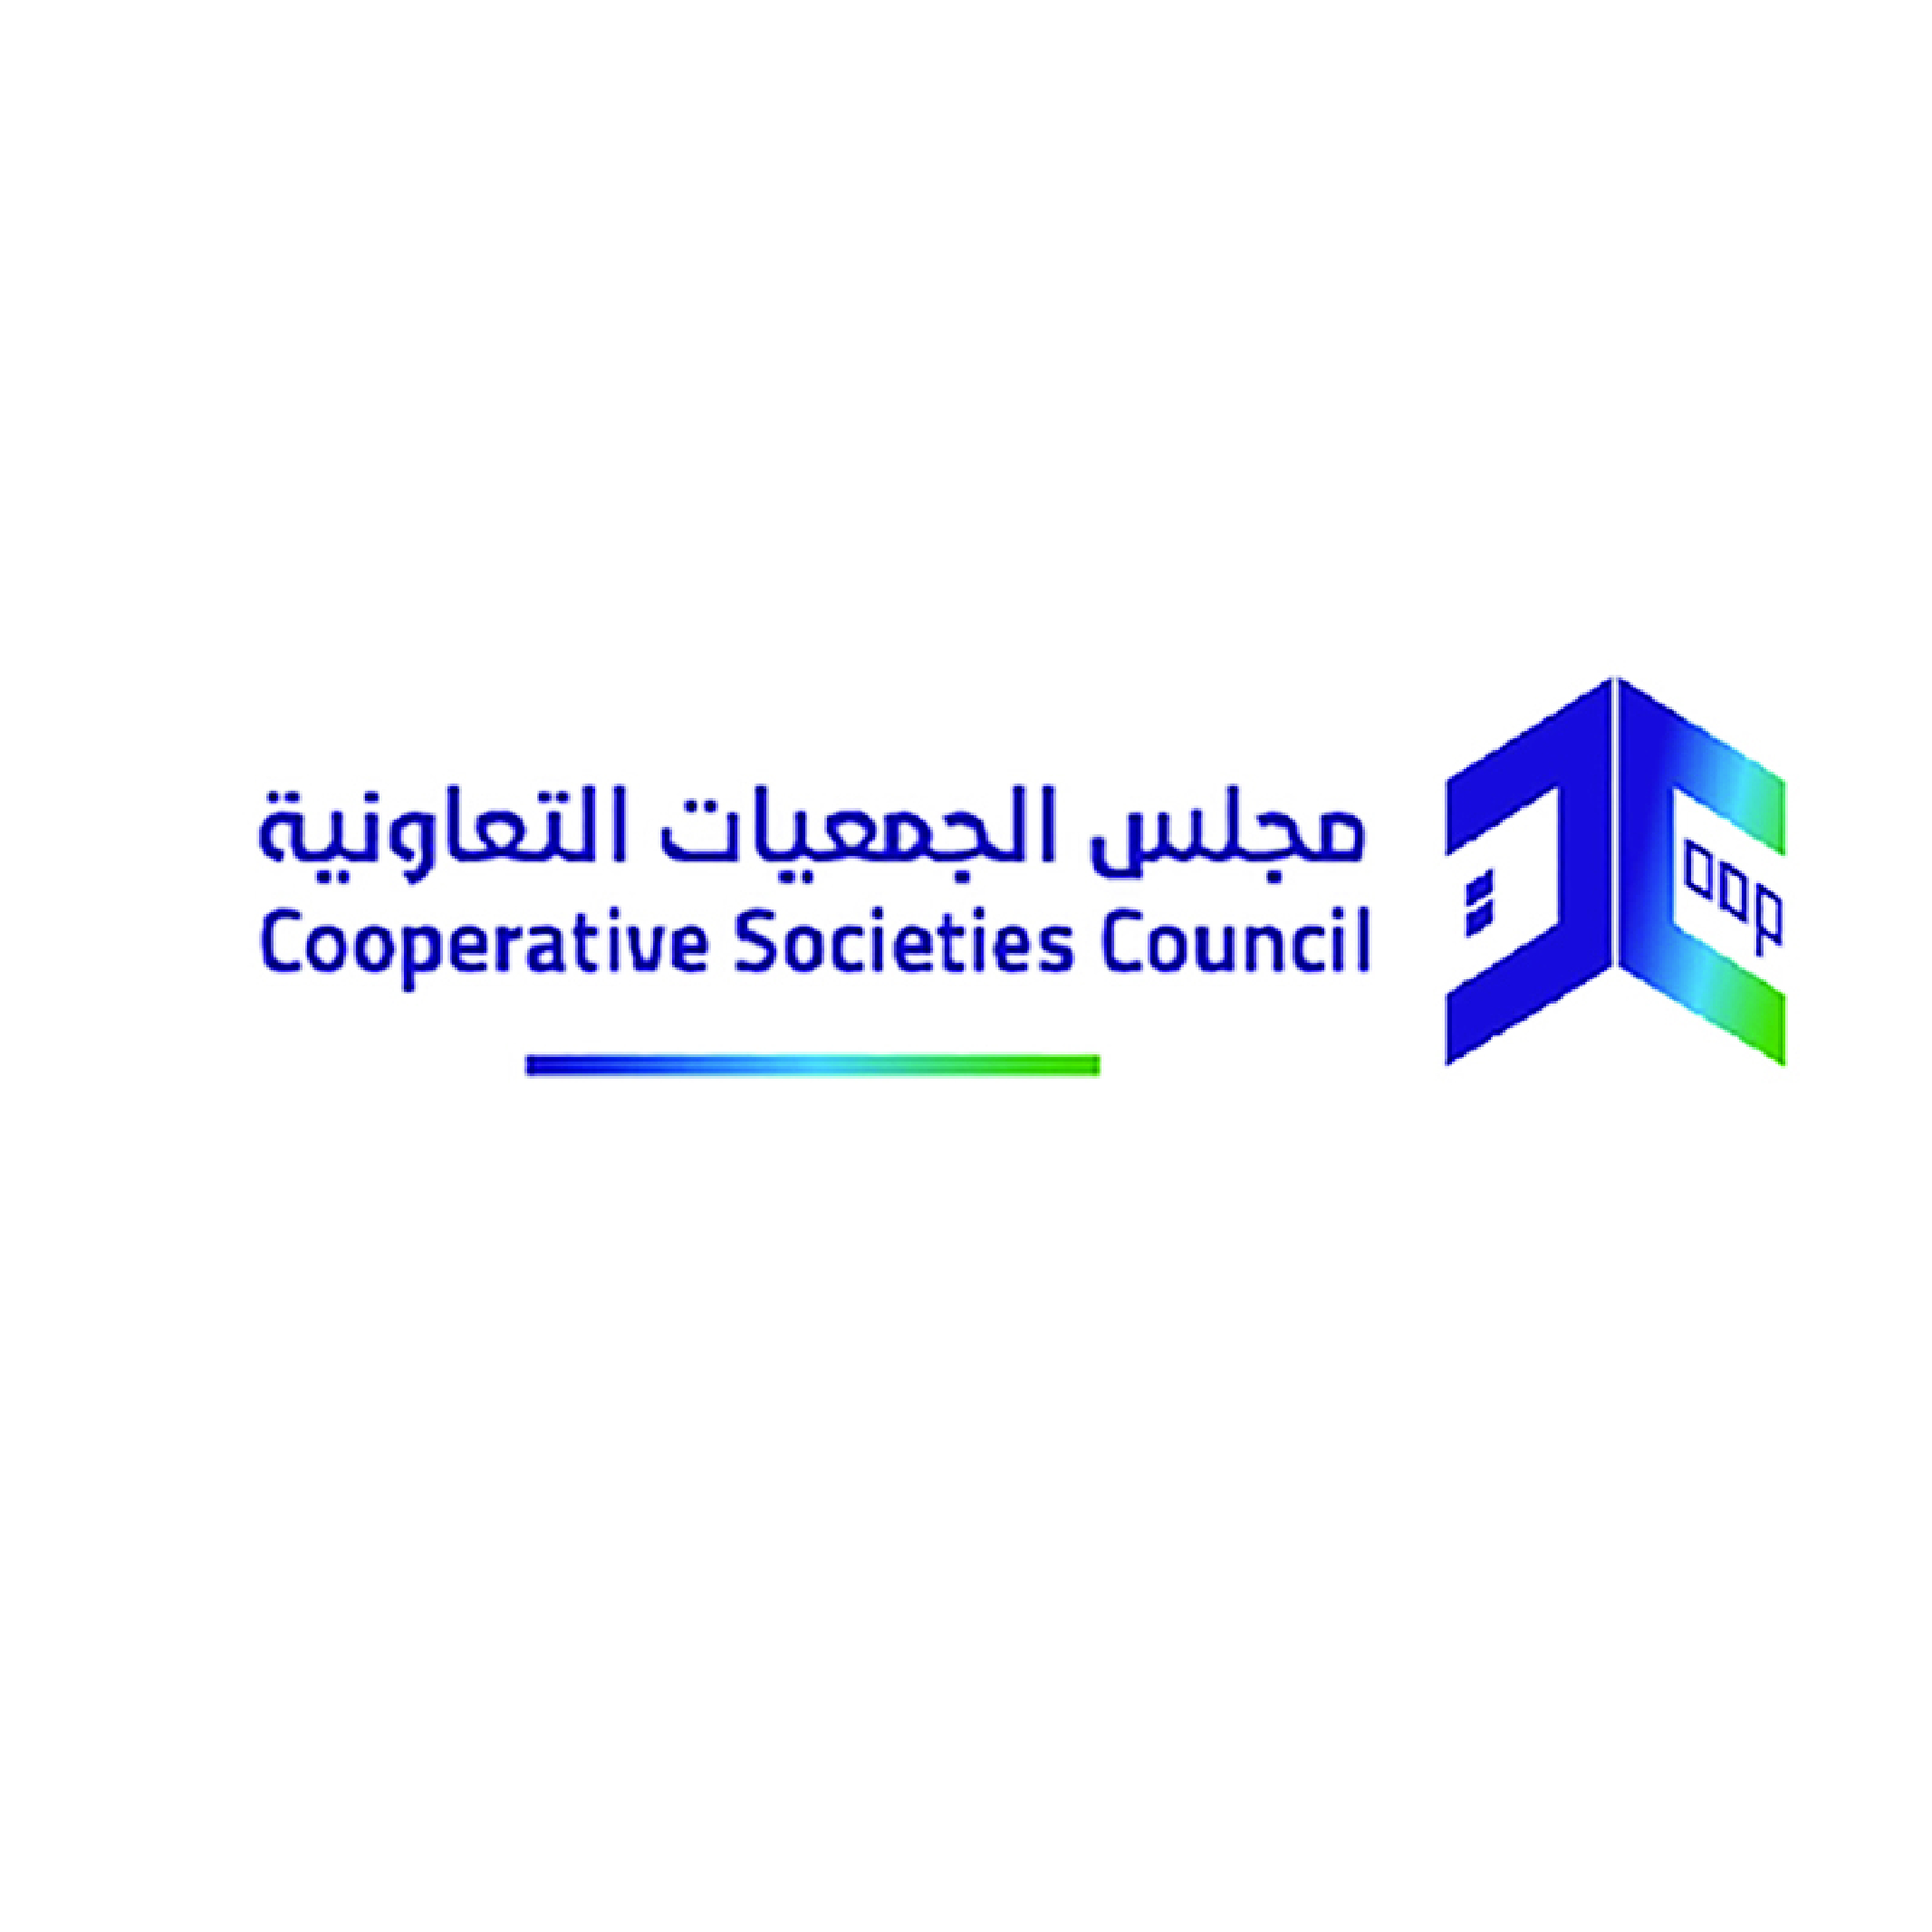 Cooperative Societies Council